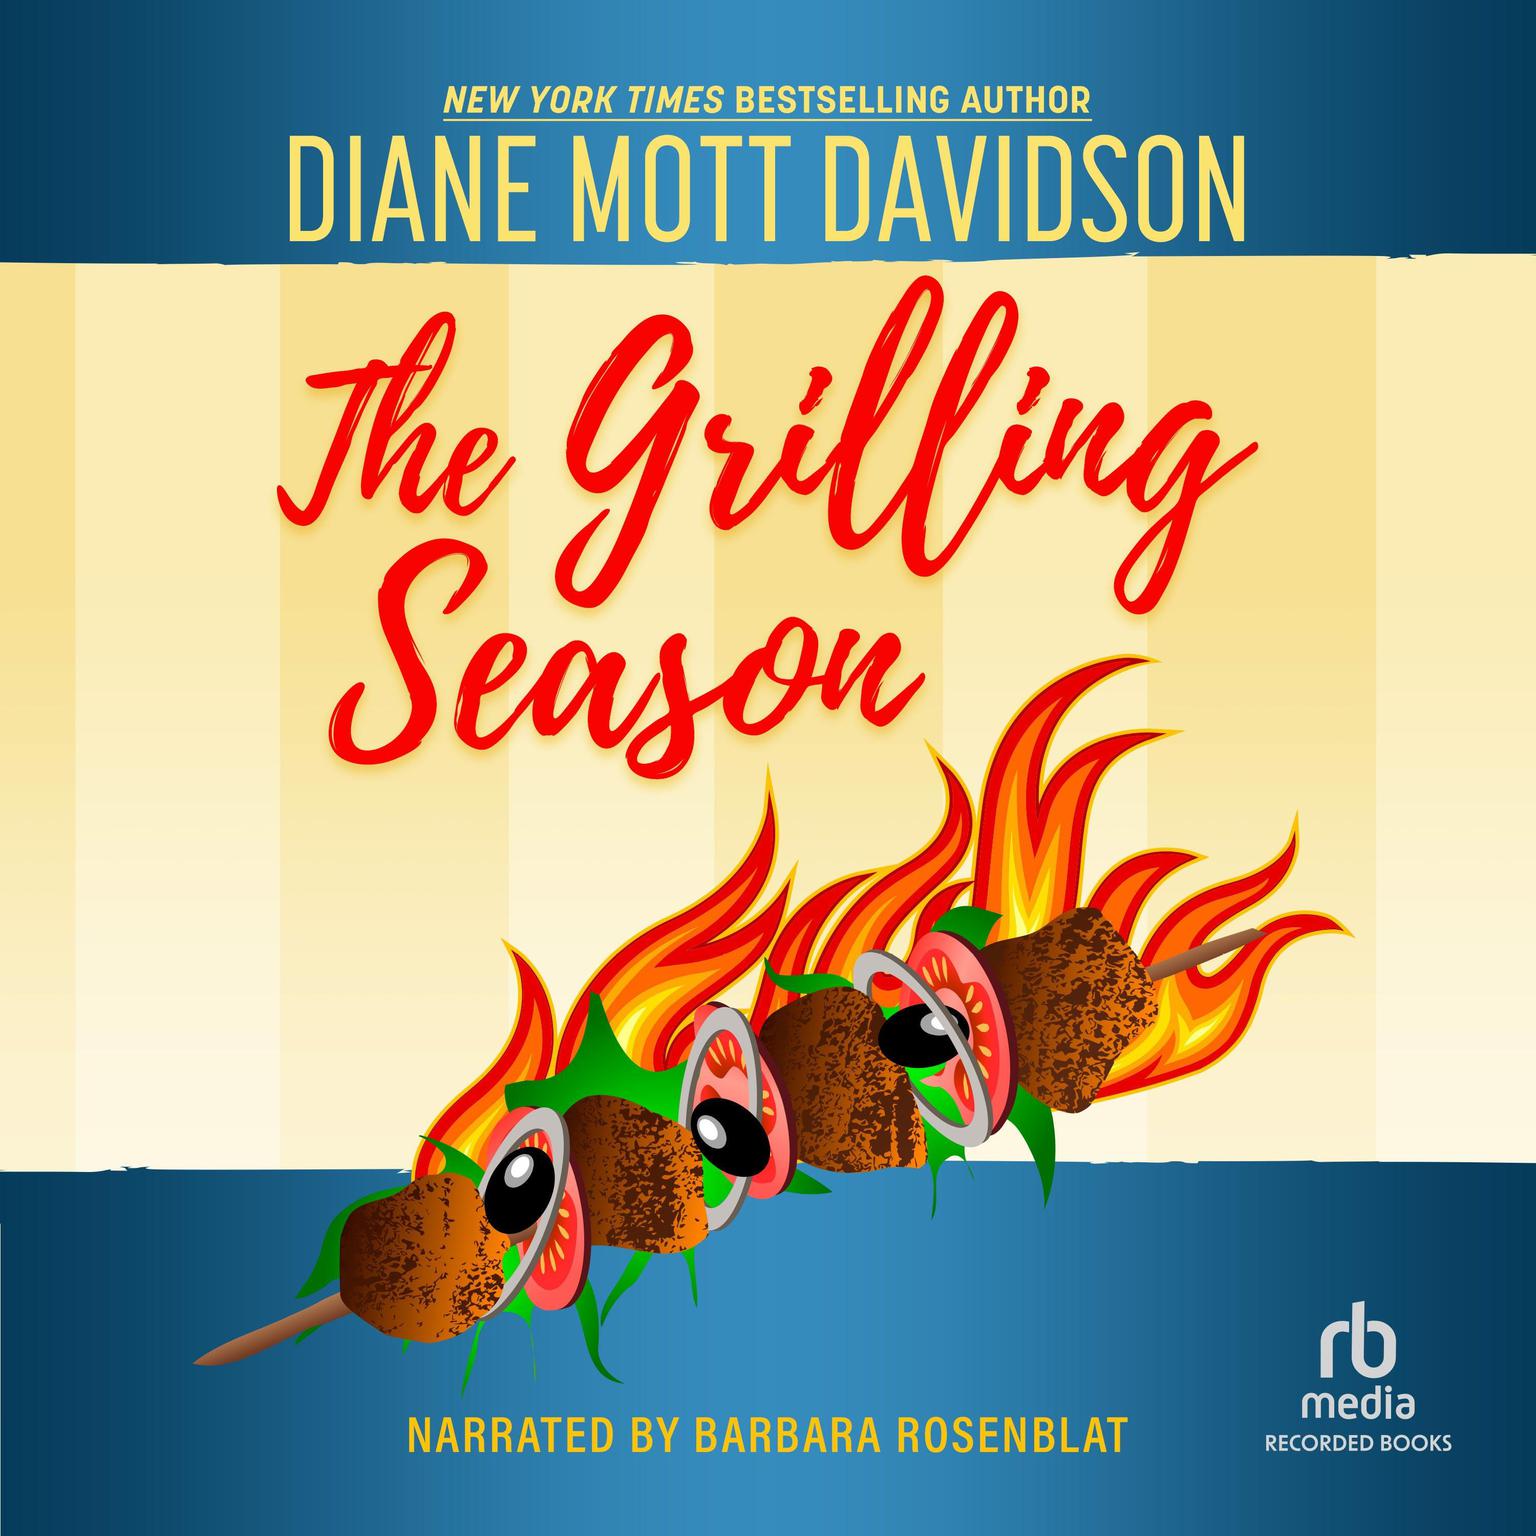 The Grilling Season Audiobook, by Diane Mott Davidson